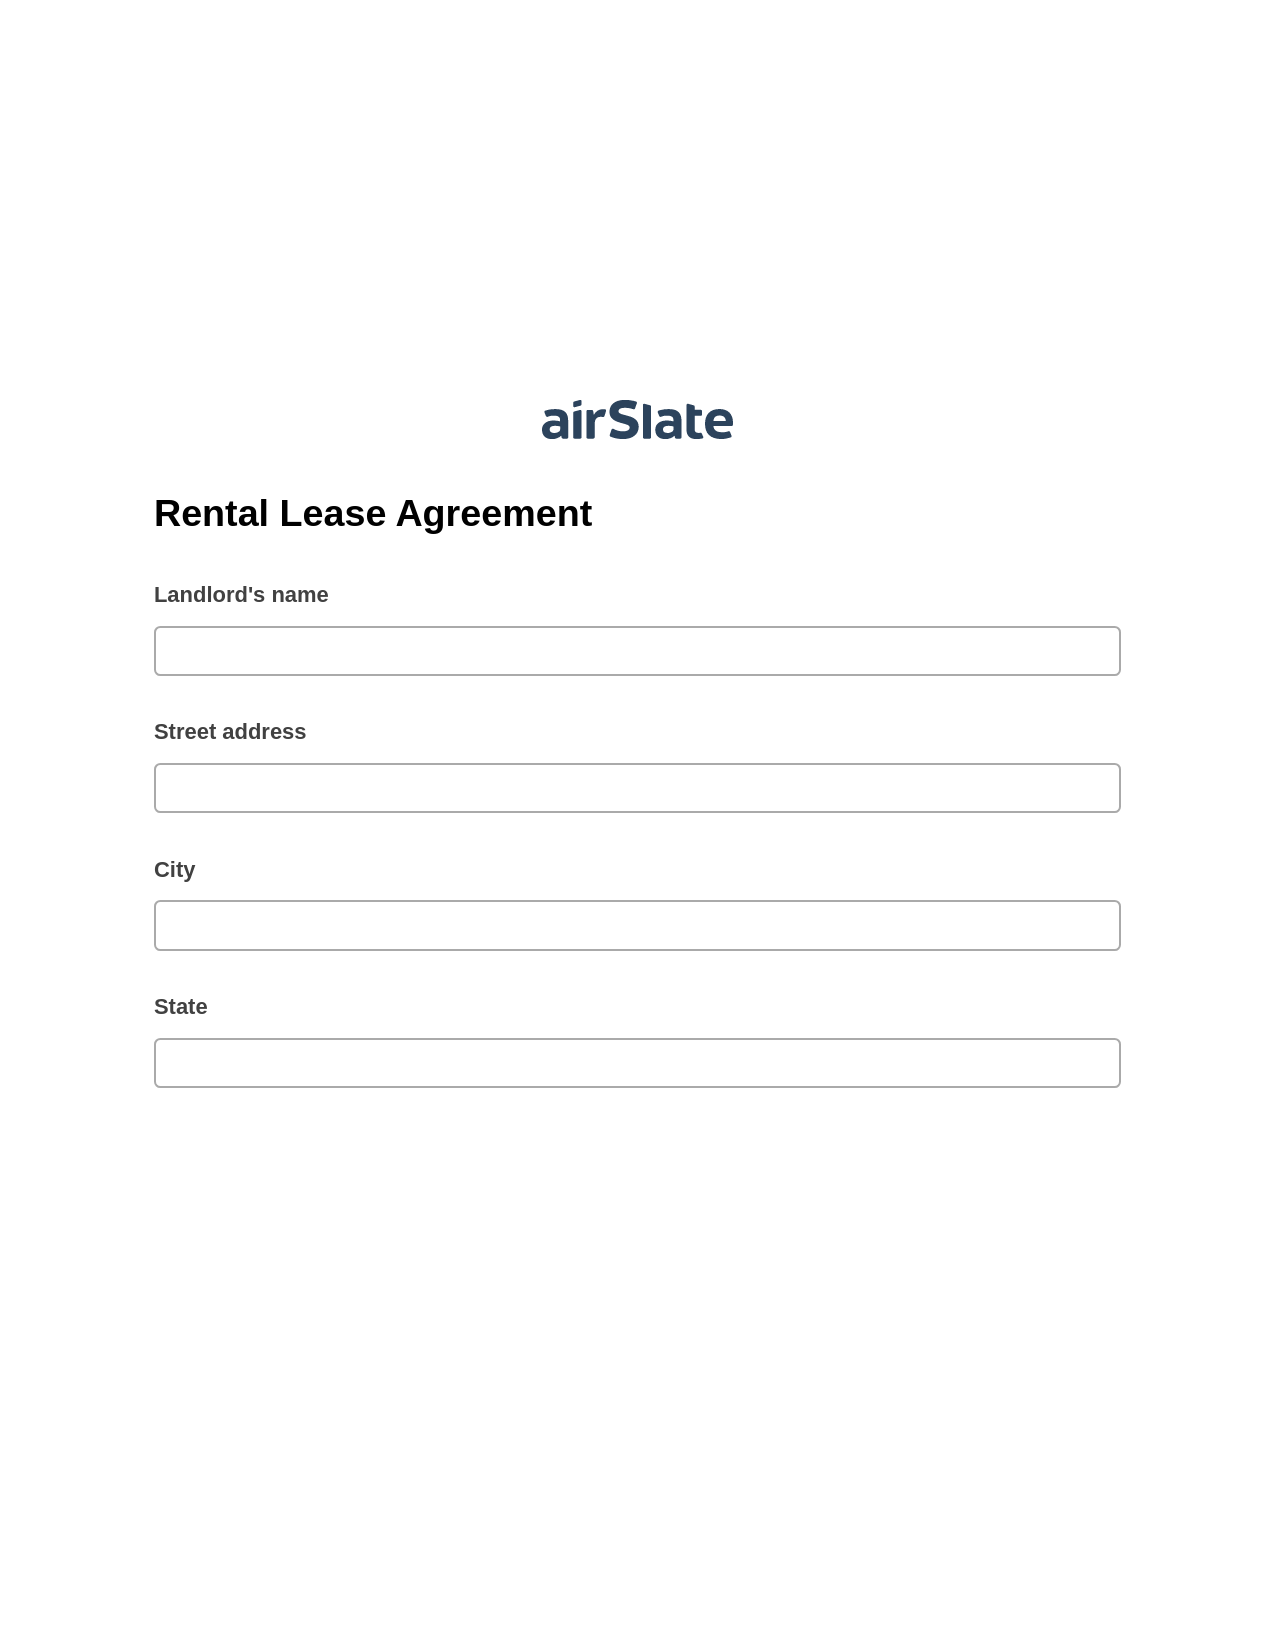 Rental Lease Agreement Pre-fill from CSV File Bot, Invoke Salesforce Process Bot, Export to Smartsheet